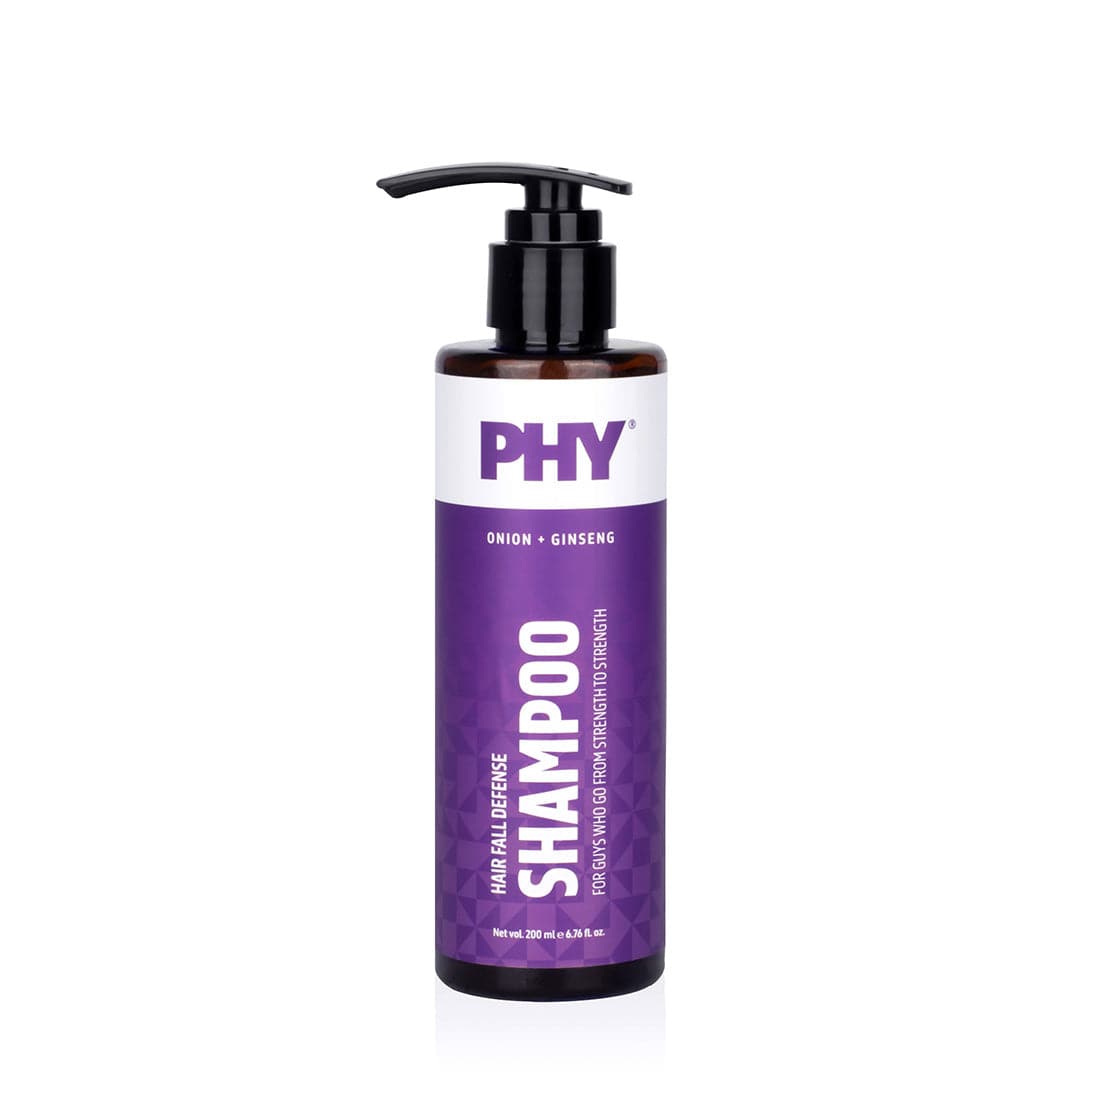 Phy Hair Fall Defense Shampoo | Onion + Ginseng | Strengthens roots & promotes hair growth | SLS-free | 100% Vegan